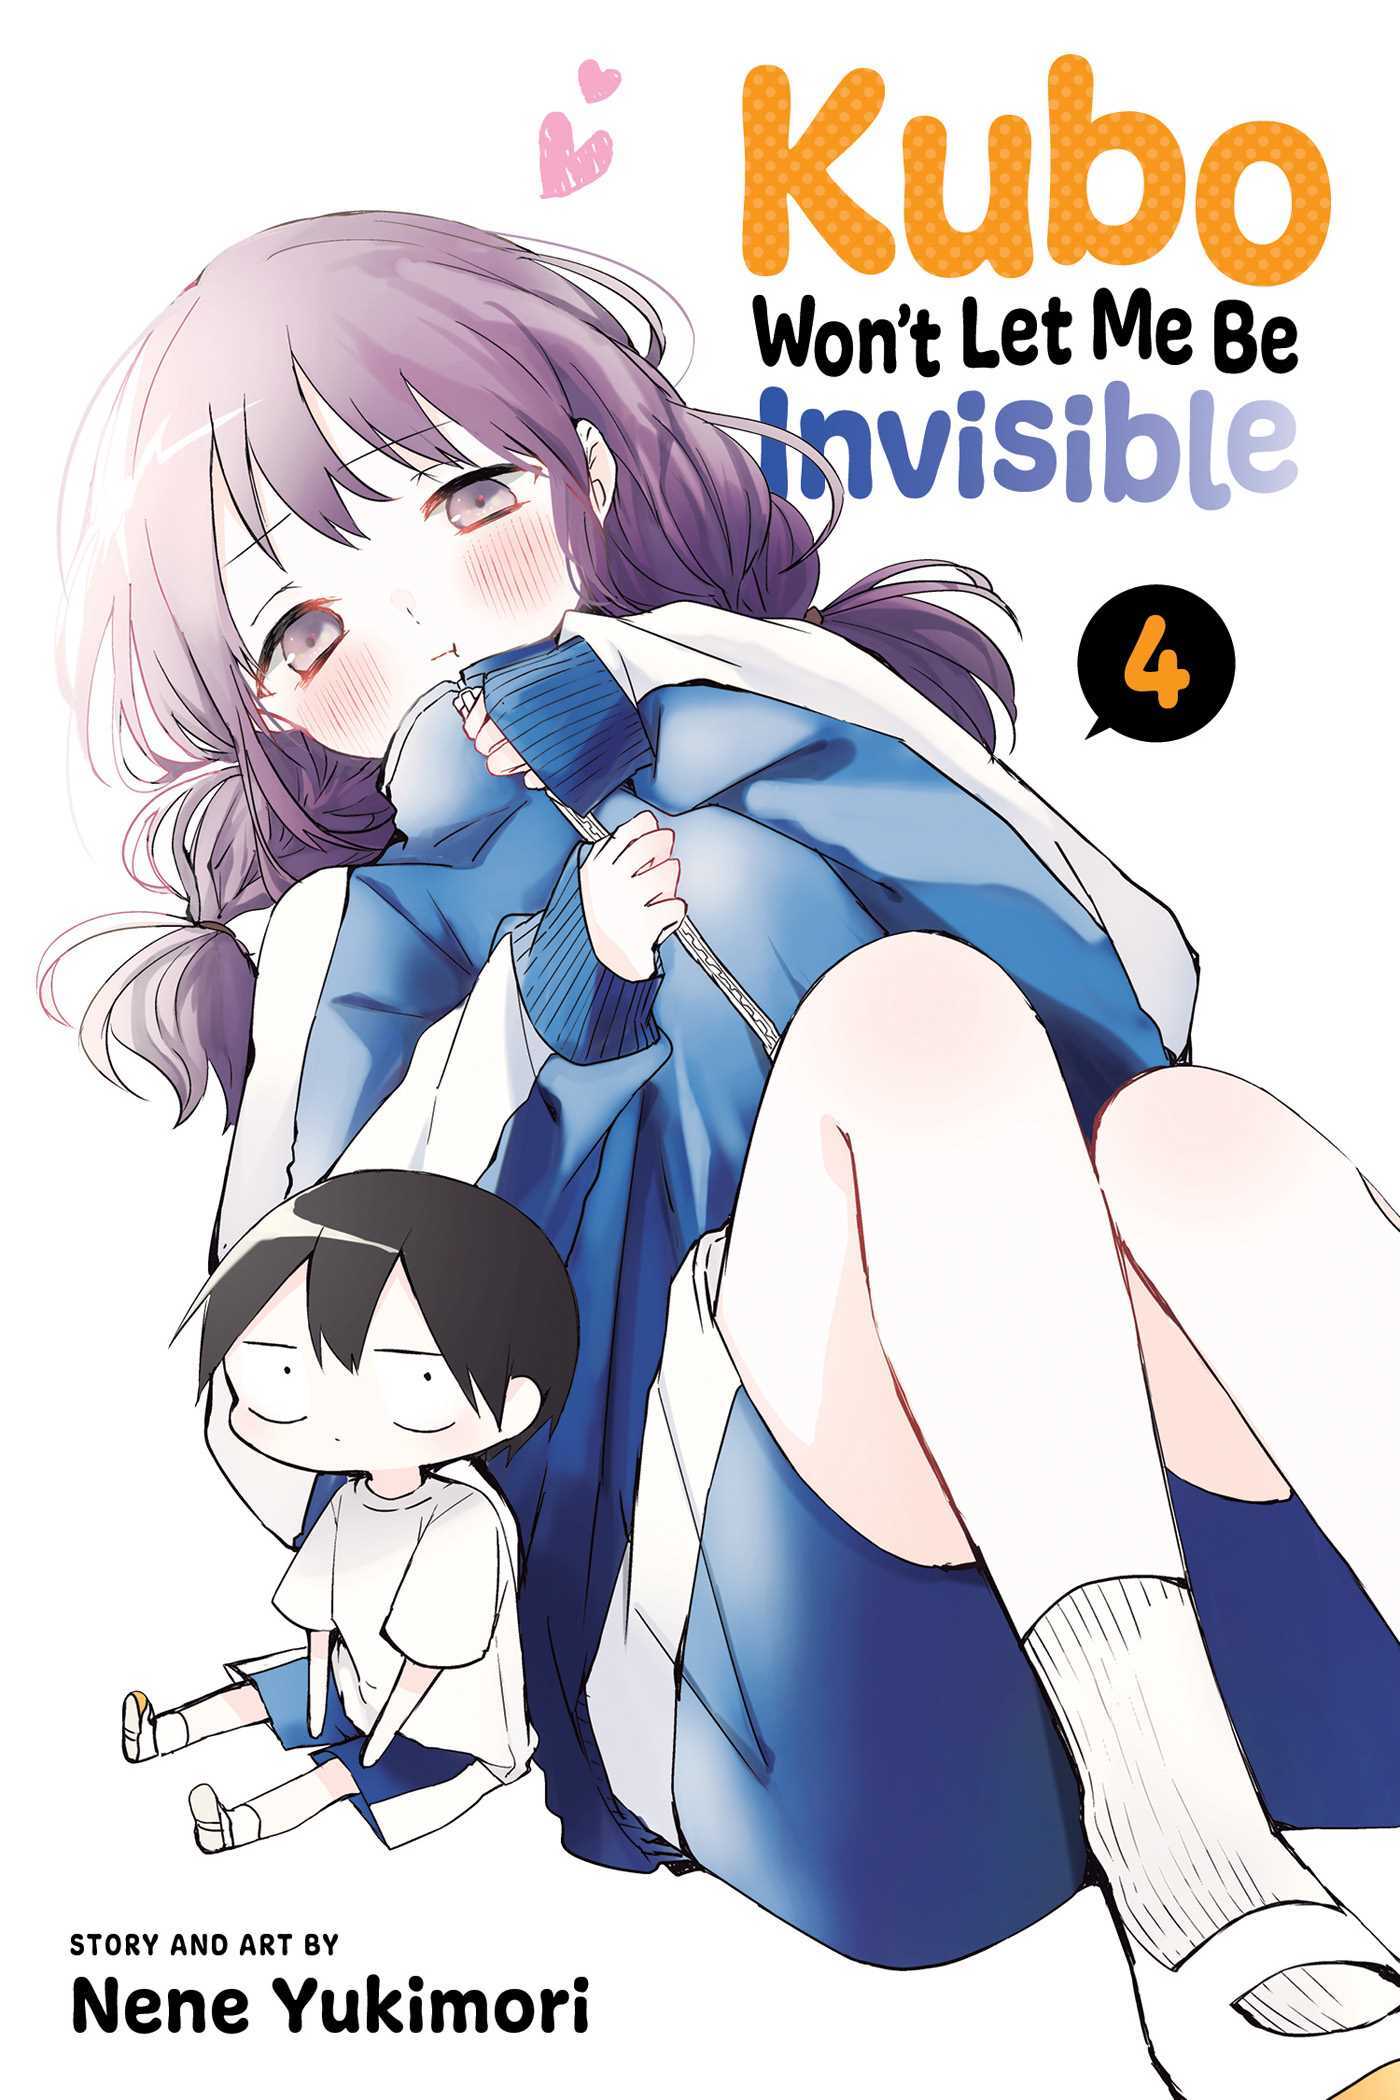 Kubo Won't Let Me Be Invisible, mangá de Nene Yukimori, tem adaptação para  anime anunciada - Crunchyroll Notícias